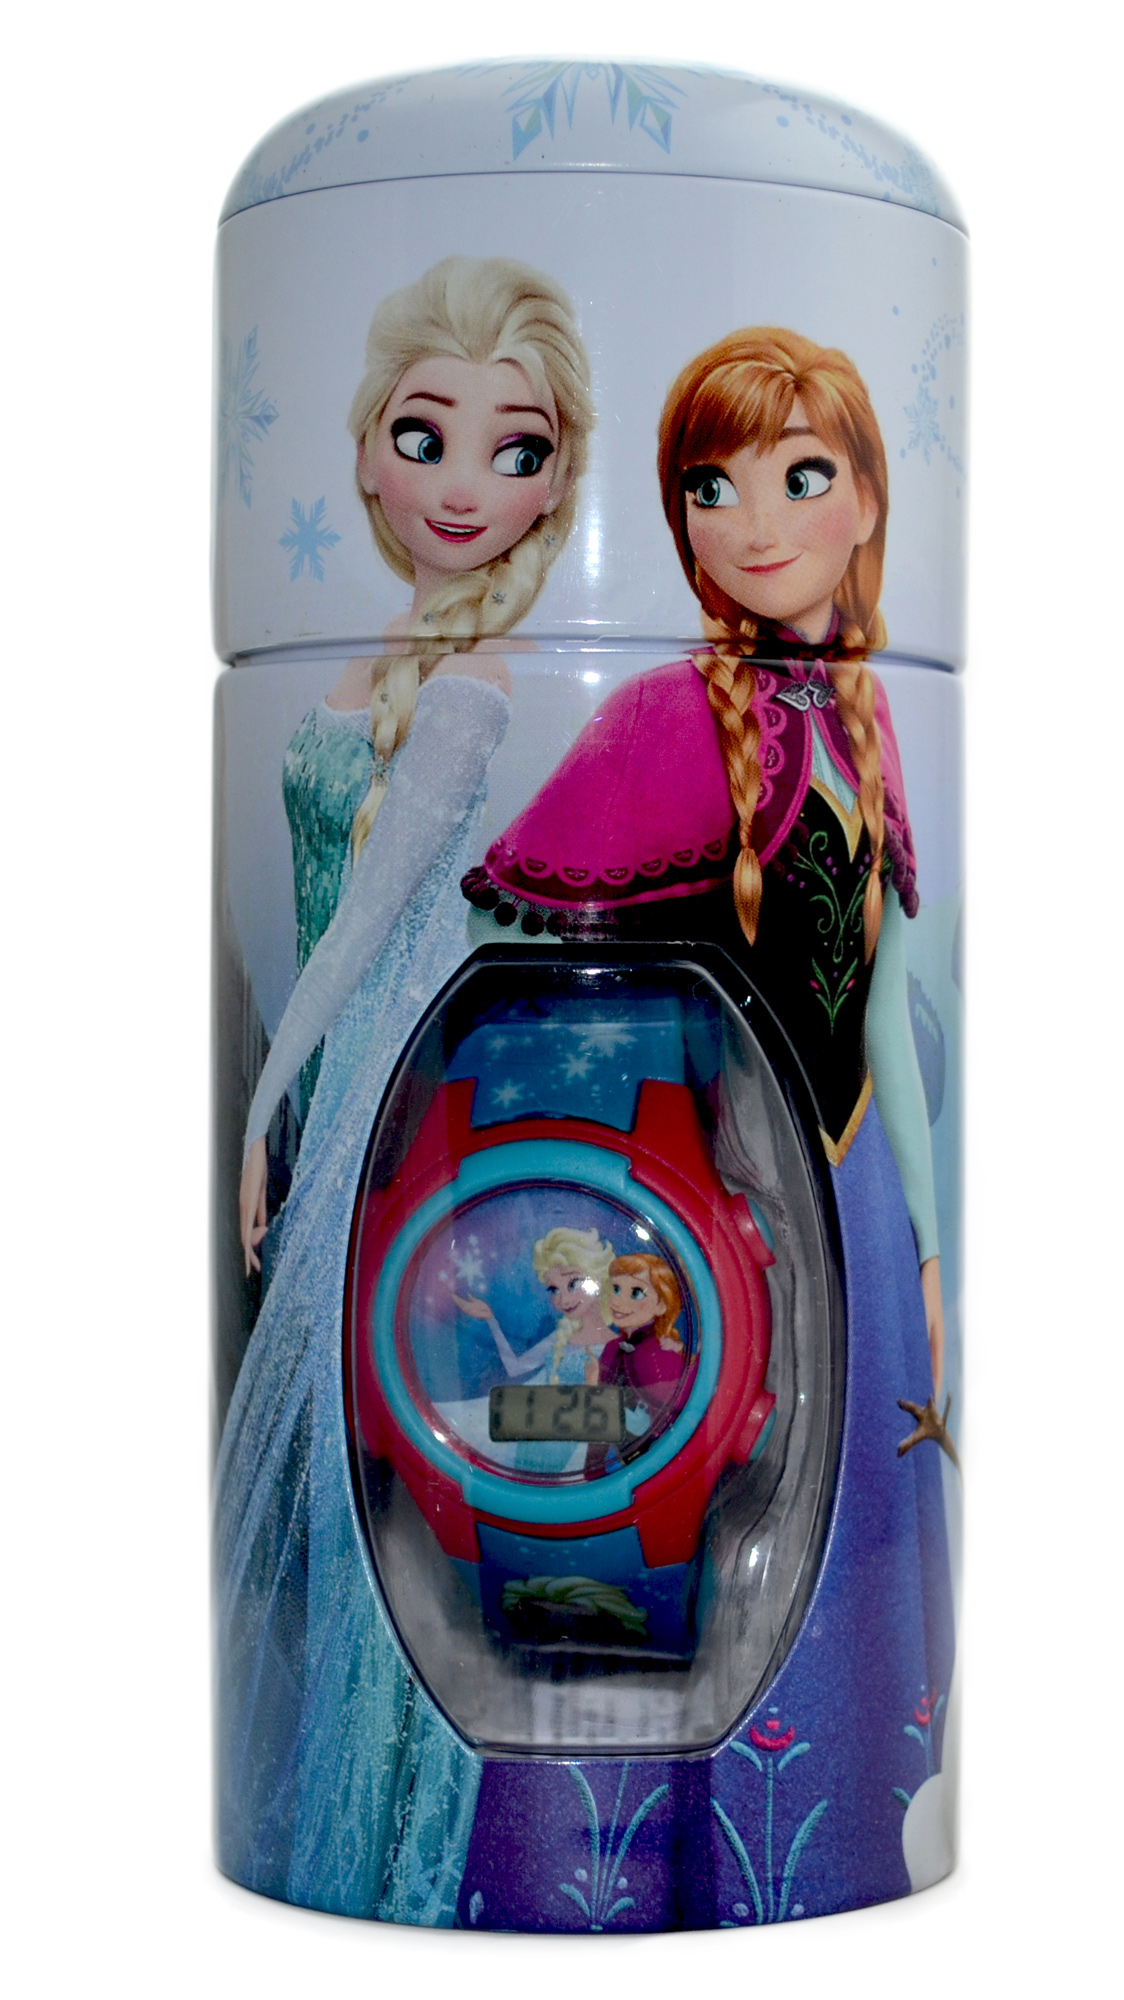 Disney Frozen Anna & Elsa 'Digital Metal Tin Gift' Wrist Watch